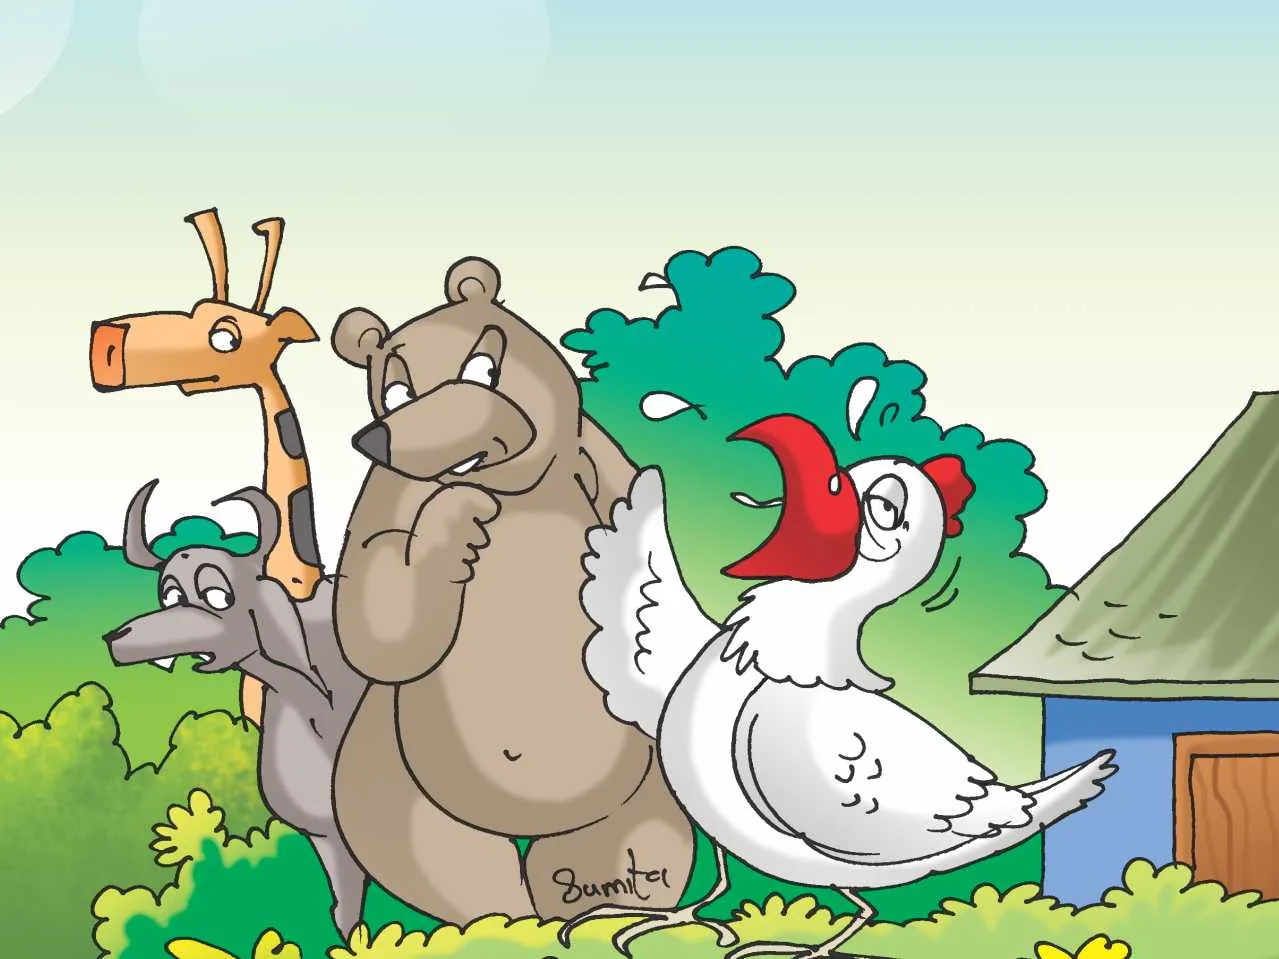 Bear, Giraffe and rooster Cartoon image